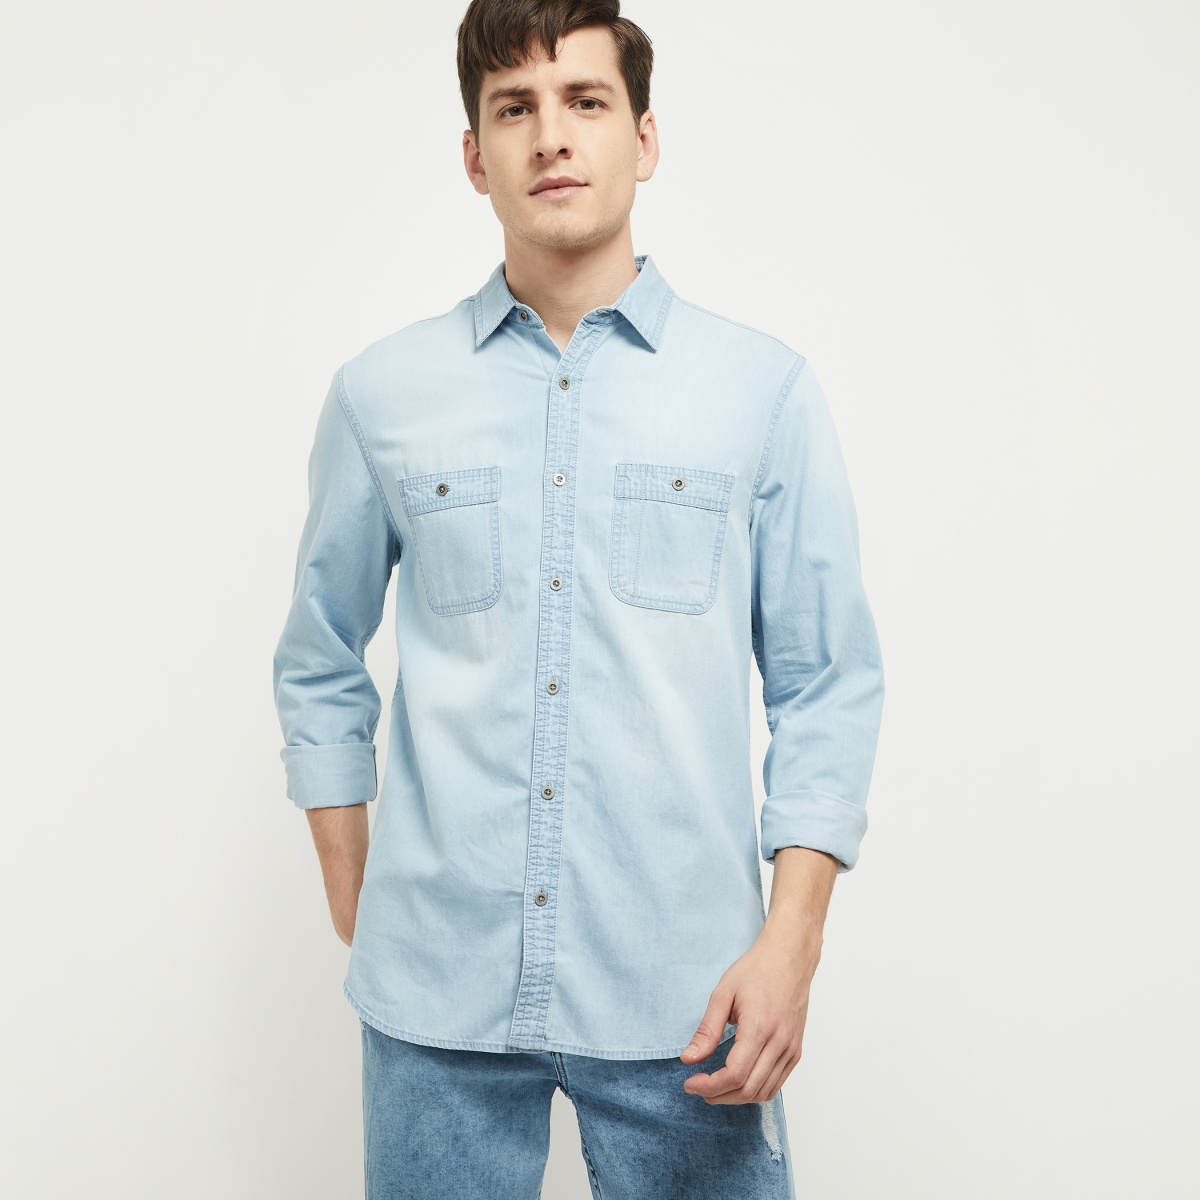 Stylish Mens Slim Fit Casual Double Collar Shirt Long Sleeve M L XL XXL  DC12 | eBay